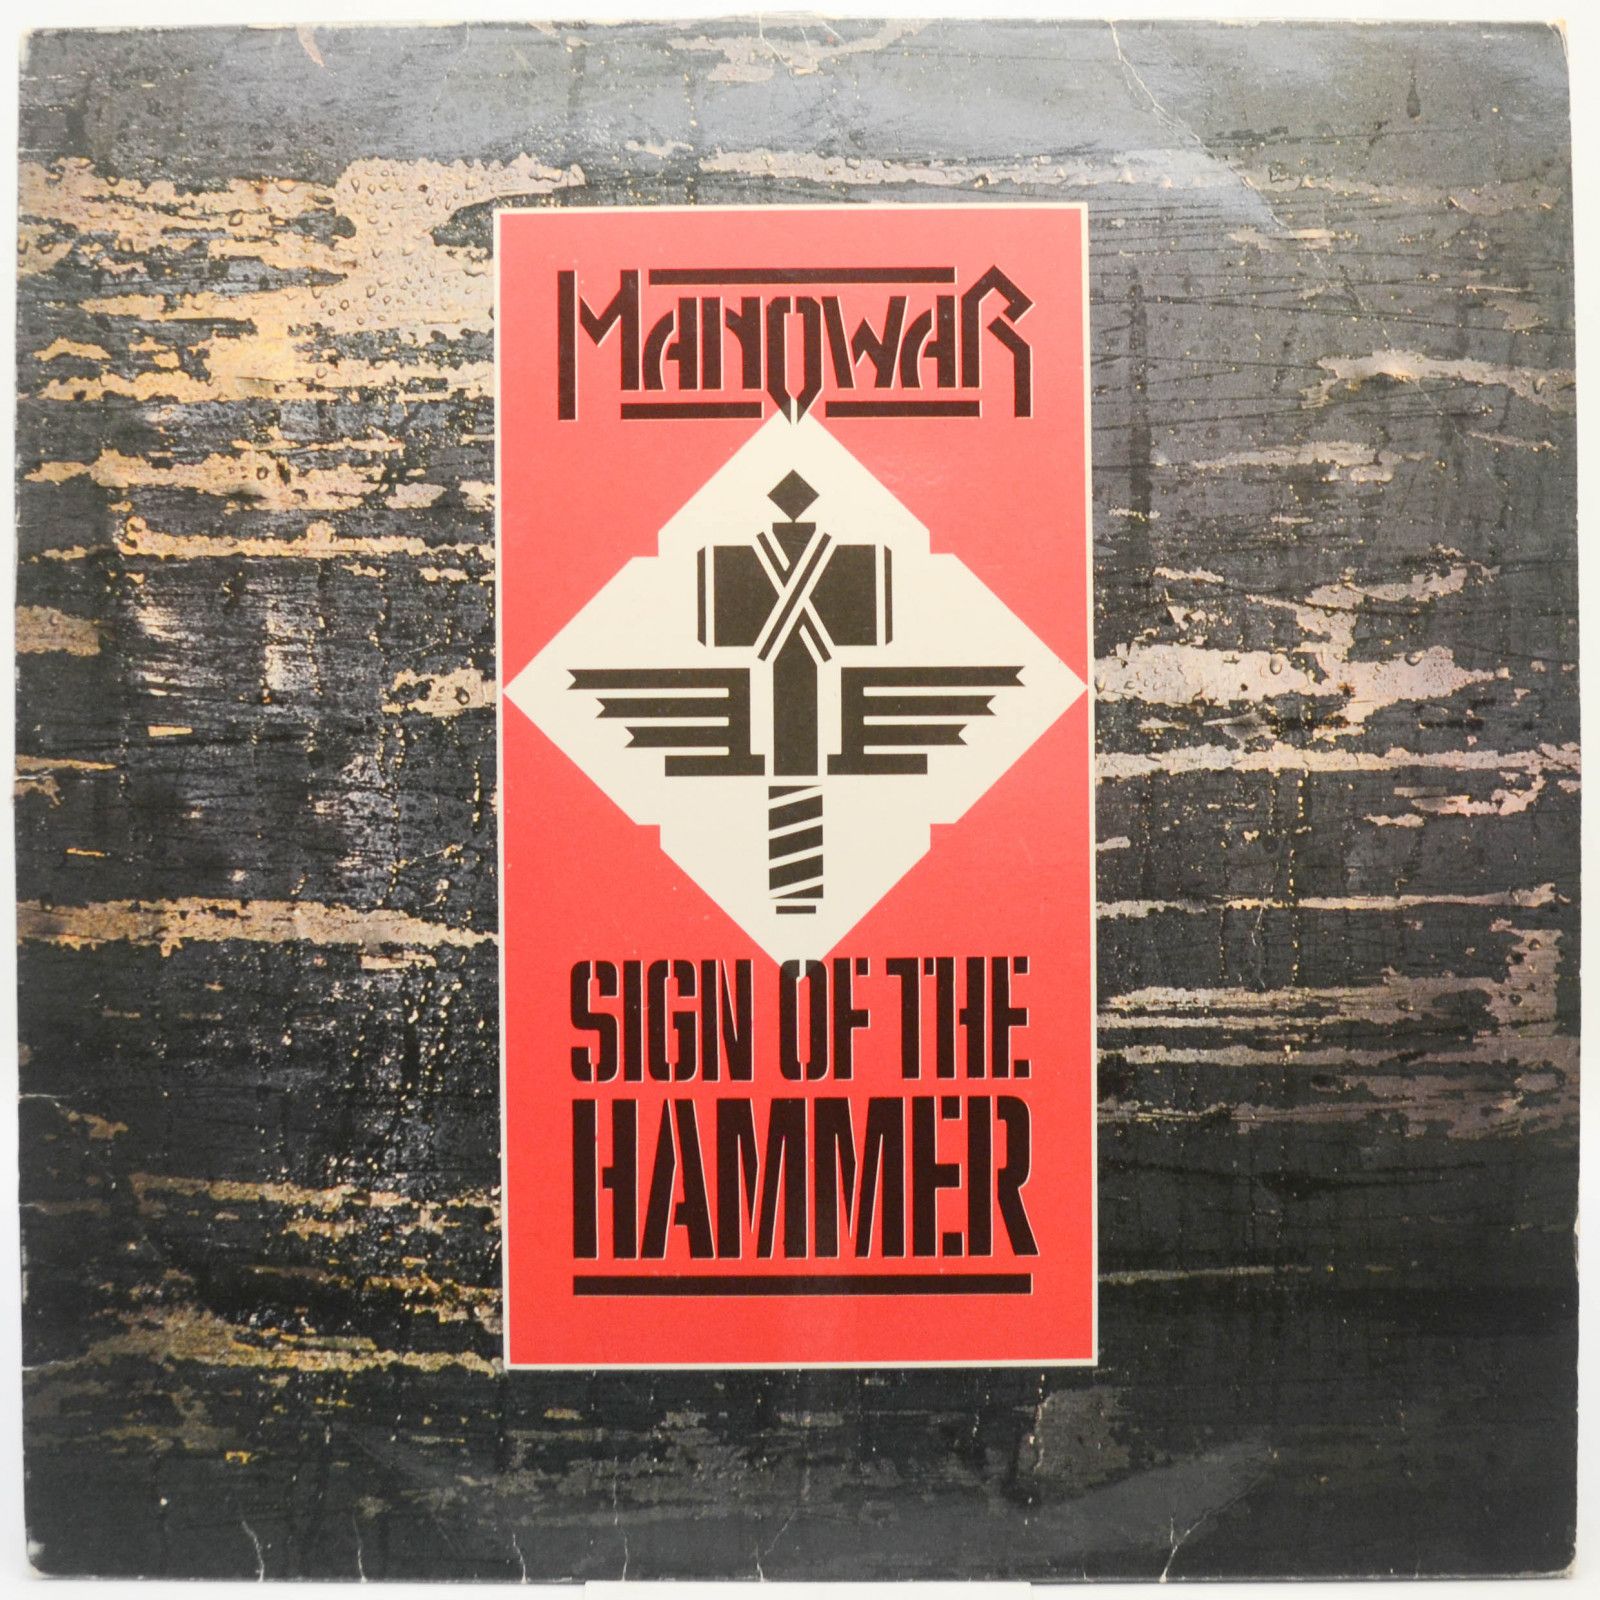 Manowar — Sign Of The Hammer, 1987